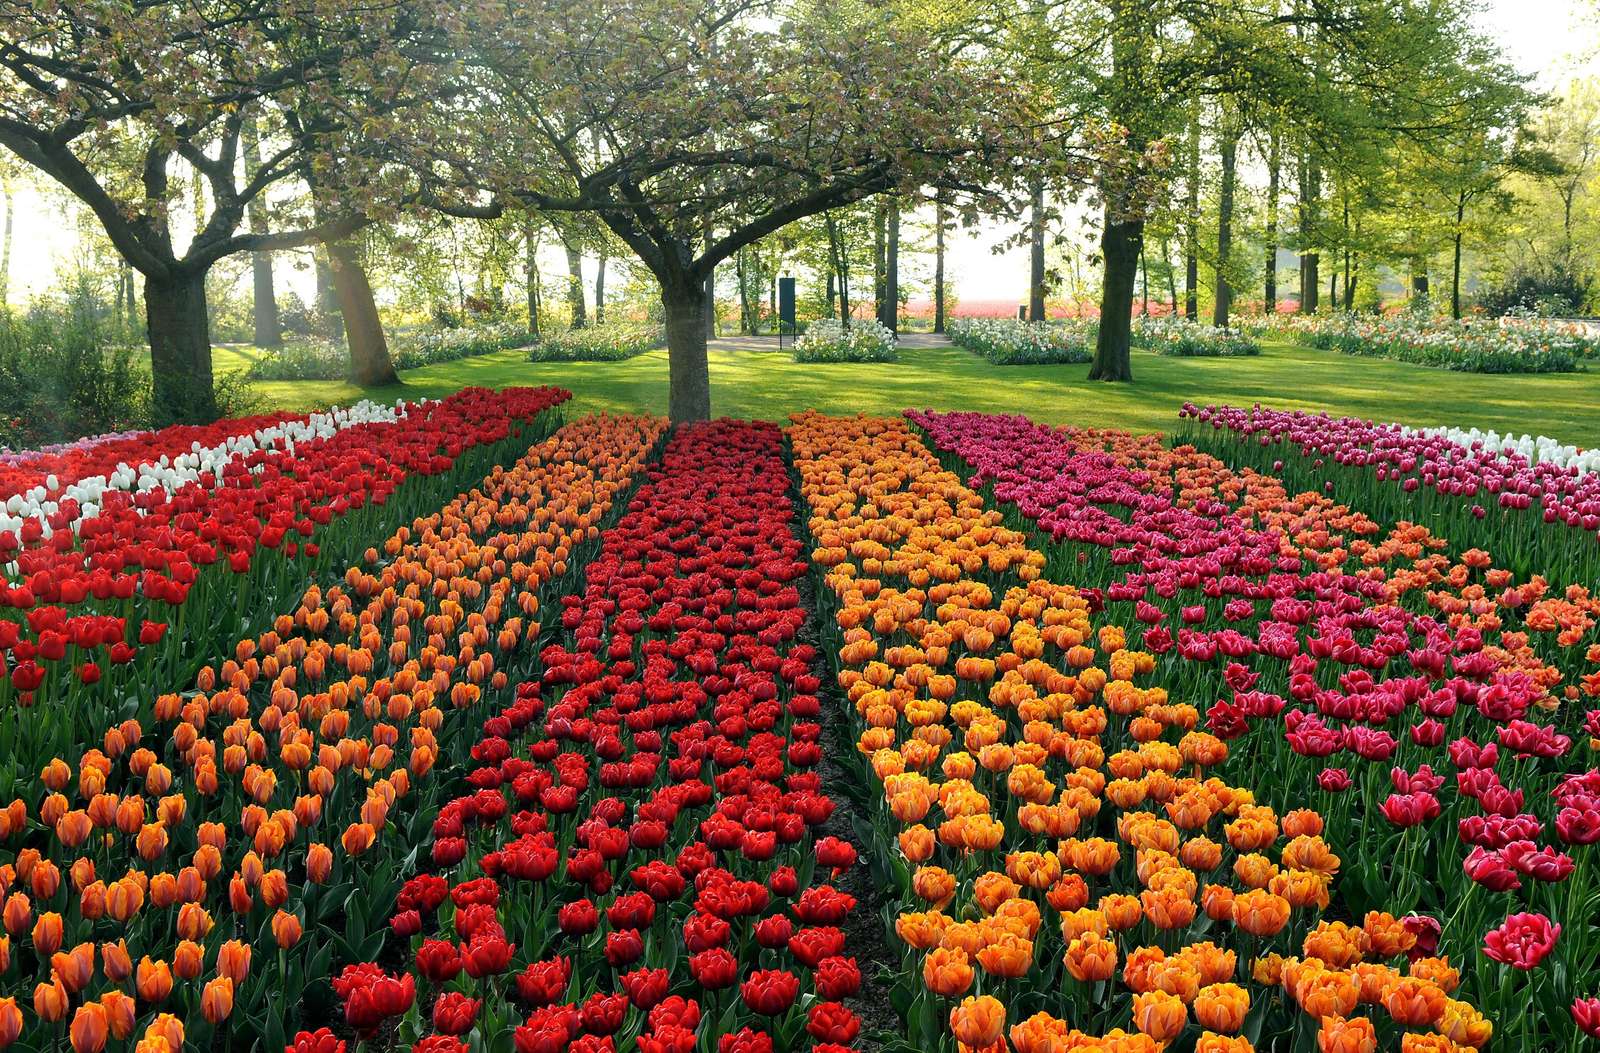 Holenderskie tulipany puzzle online